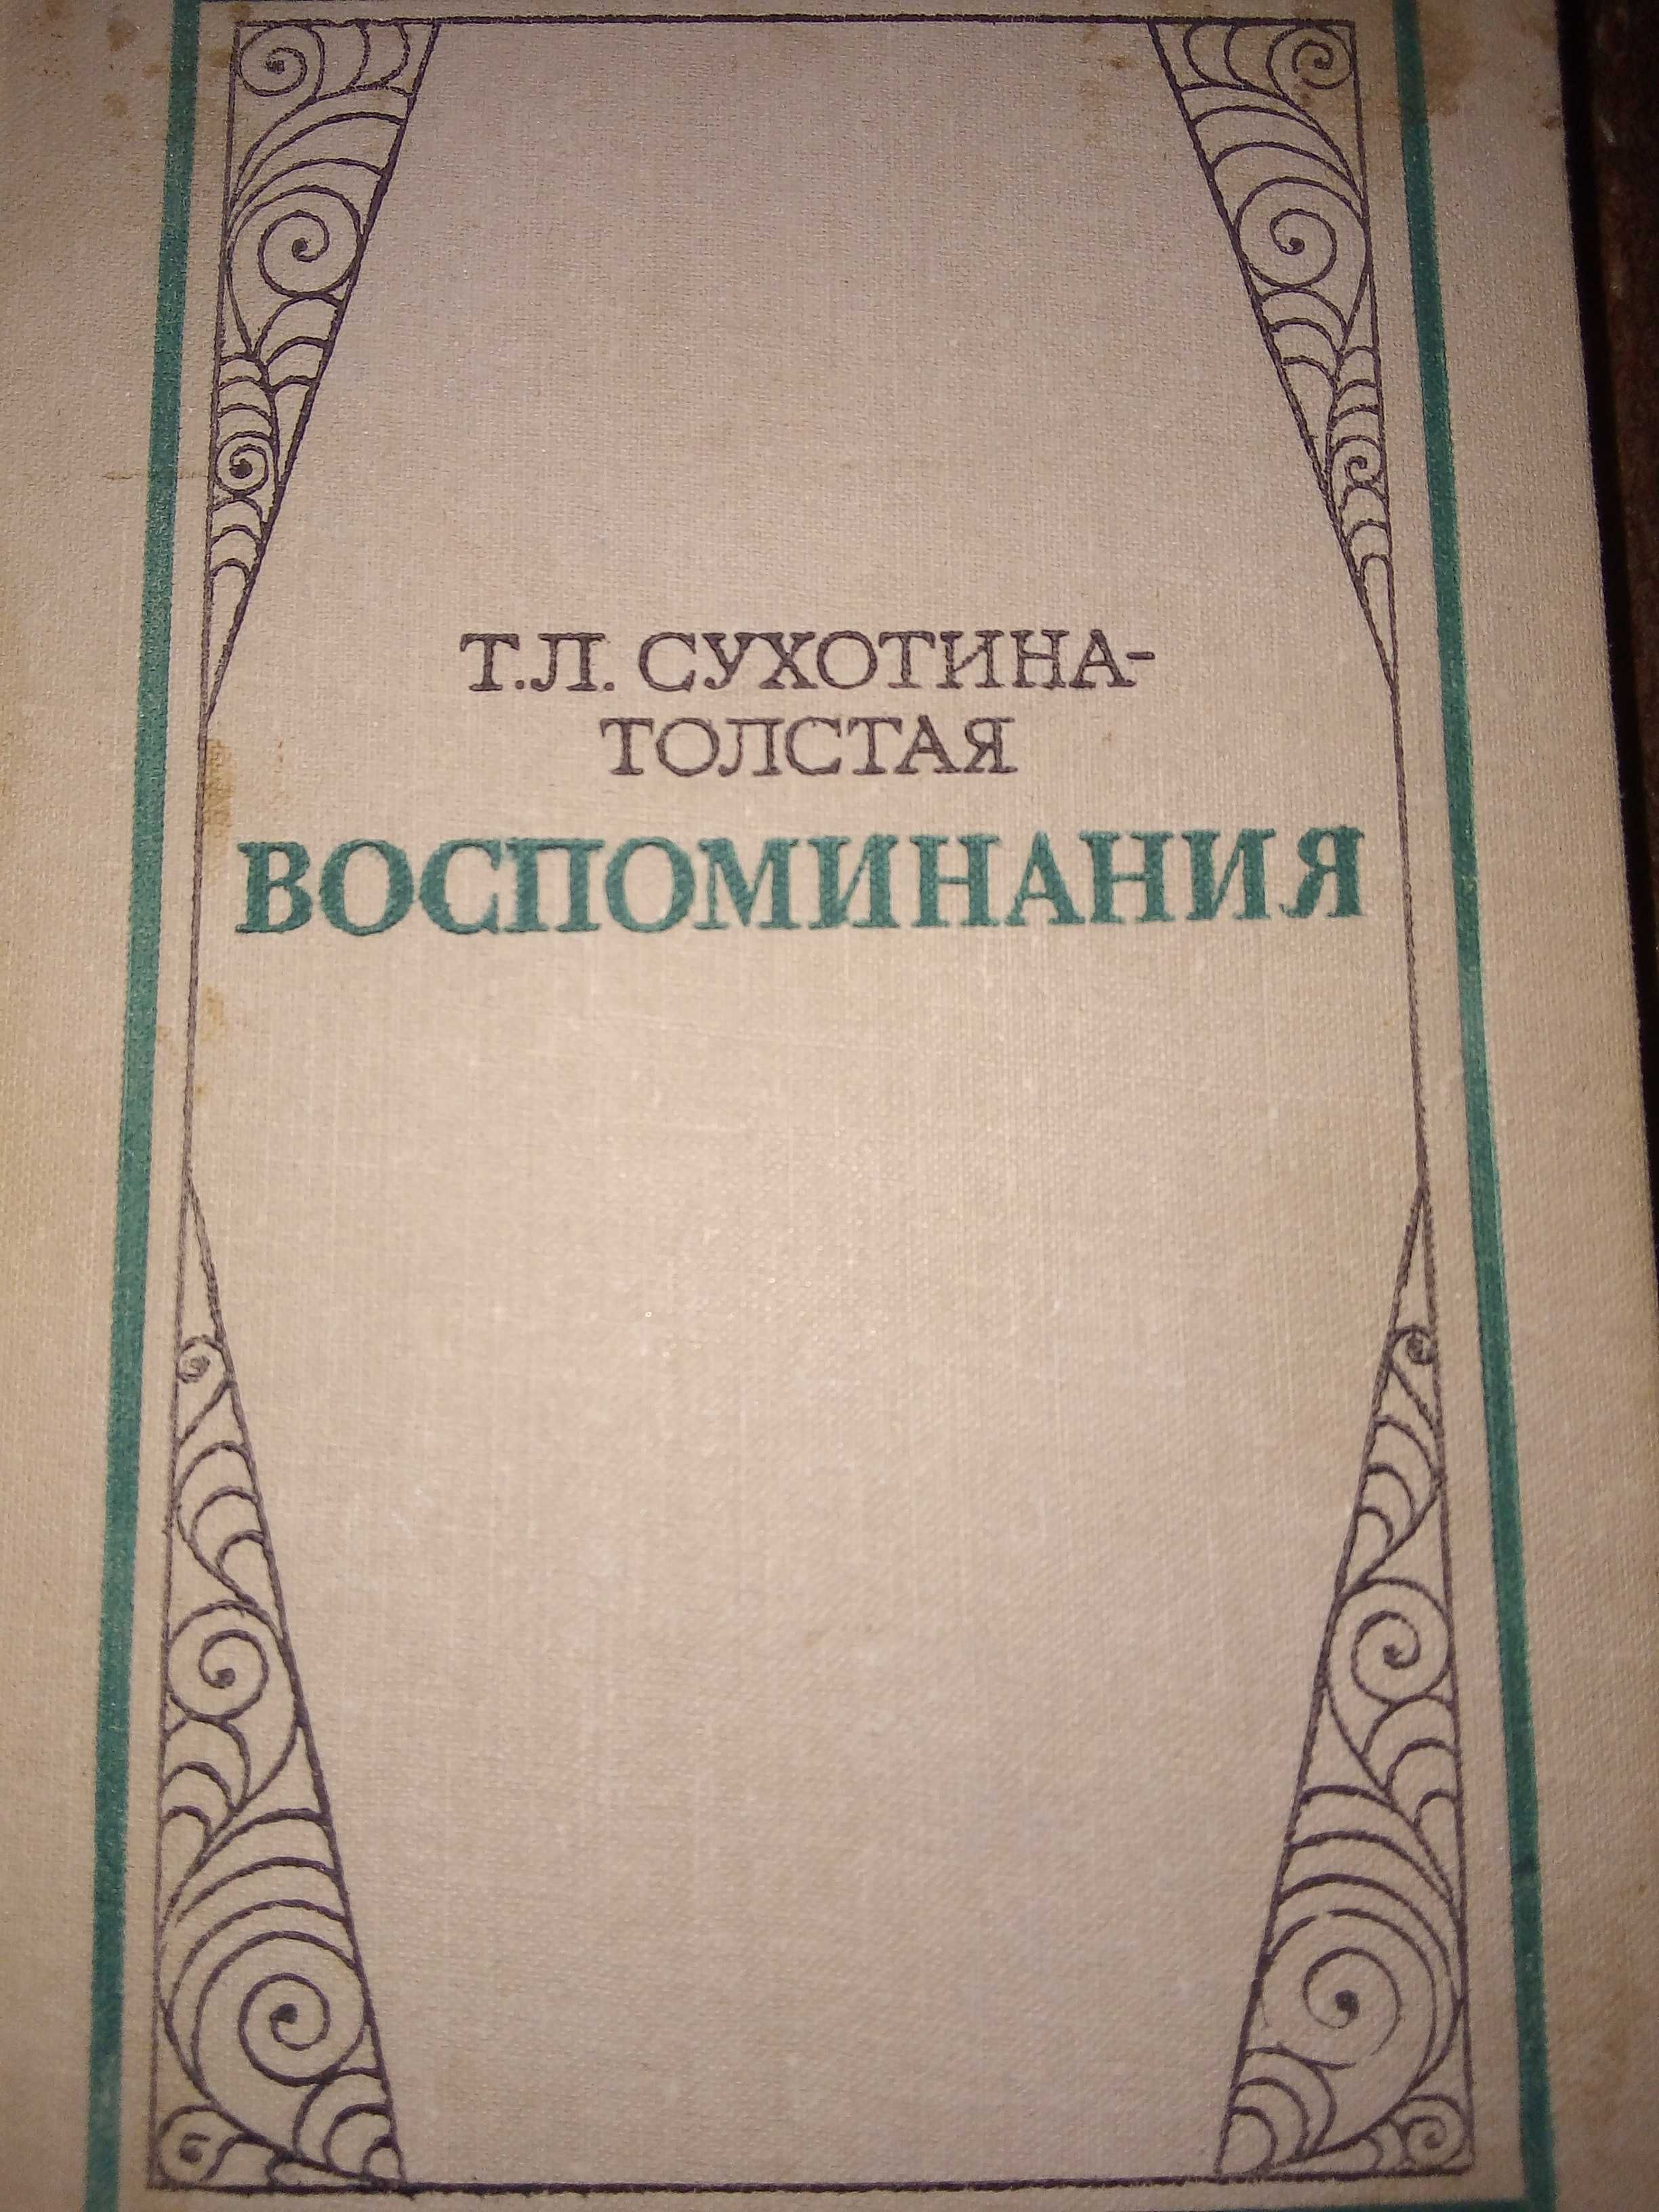 Книга "Воспоминания". Автор Т. Л. Сухотина-Толстая. 75 грн.